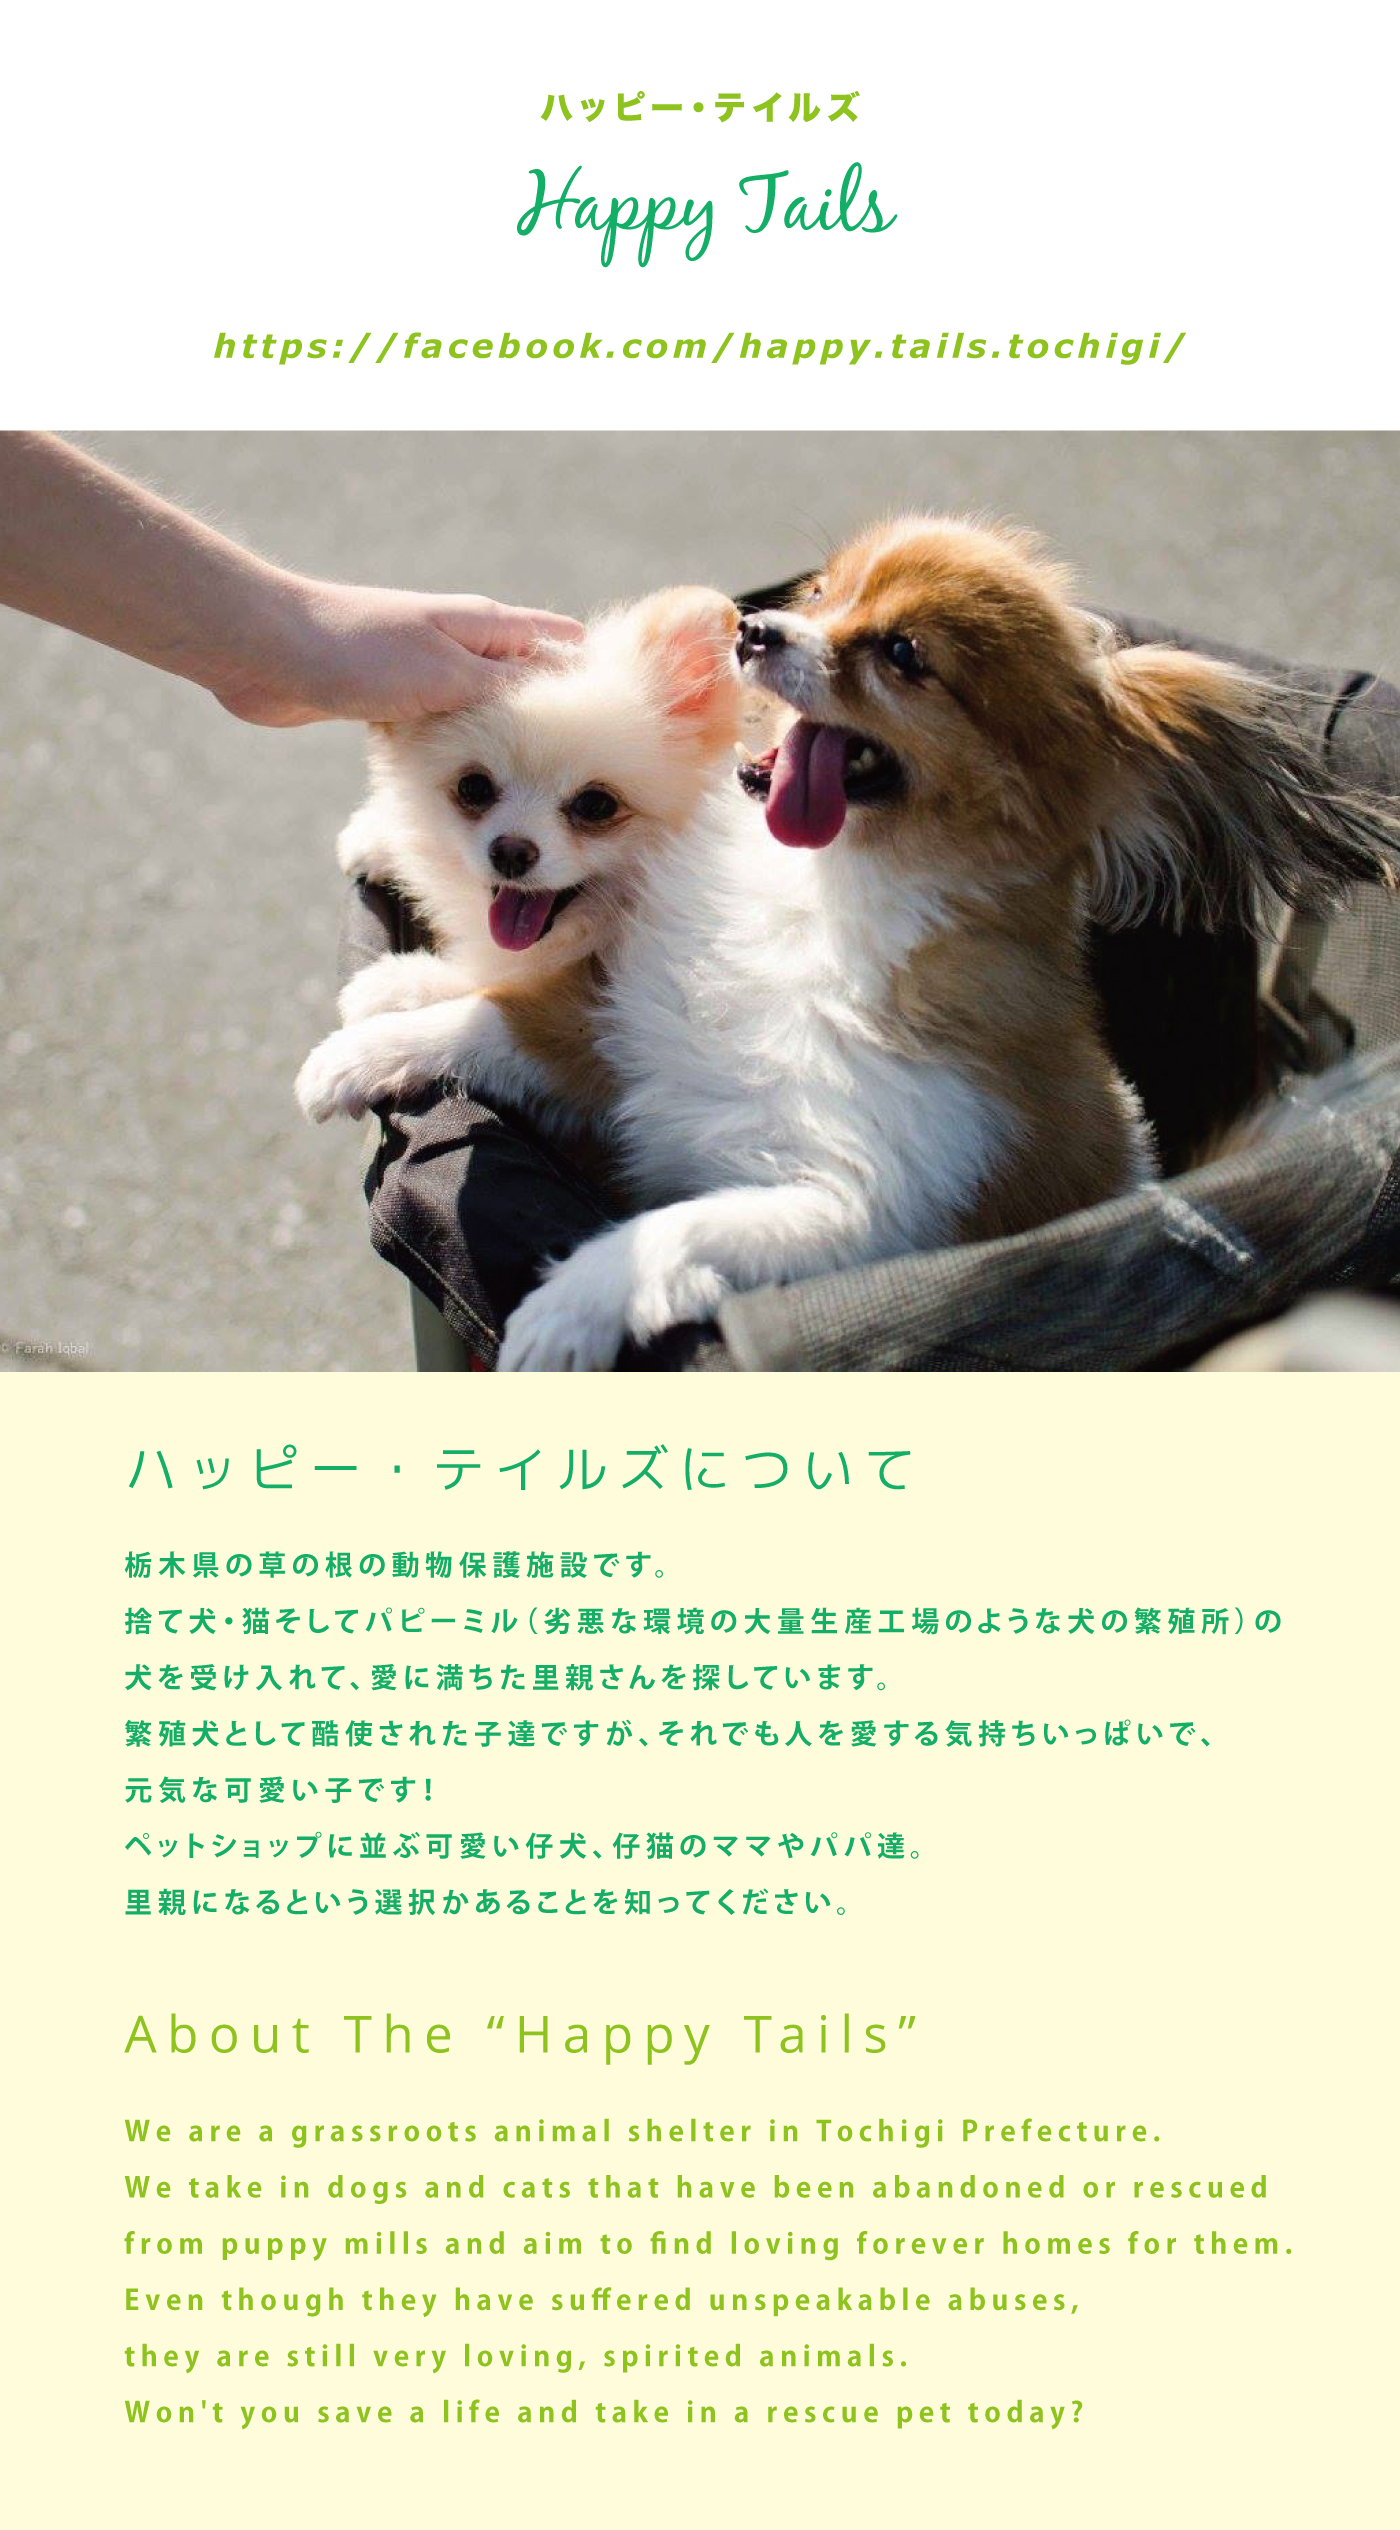 Happy Tails ハッピー・テイルズ。栃木県の草の根の動物保護施設です。捨て犬・猫そしてパピーミル（劣悪な環境の大量生産工場のような犬の繁殖所）の犬を受け入れて、愛に満ちた里親さんを探しています。繁殖犬として酷使された子達ですが、それでも人を愛する気持ちいっぱいで、元気な可愛い子です！ペットショップに並ぶ可愛い仔犬、仔猫のママやパパ達。里親になるという選択かあることを知ってください。